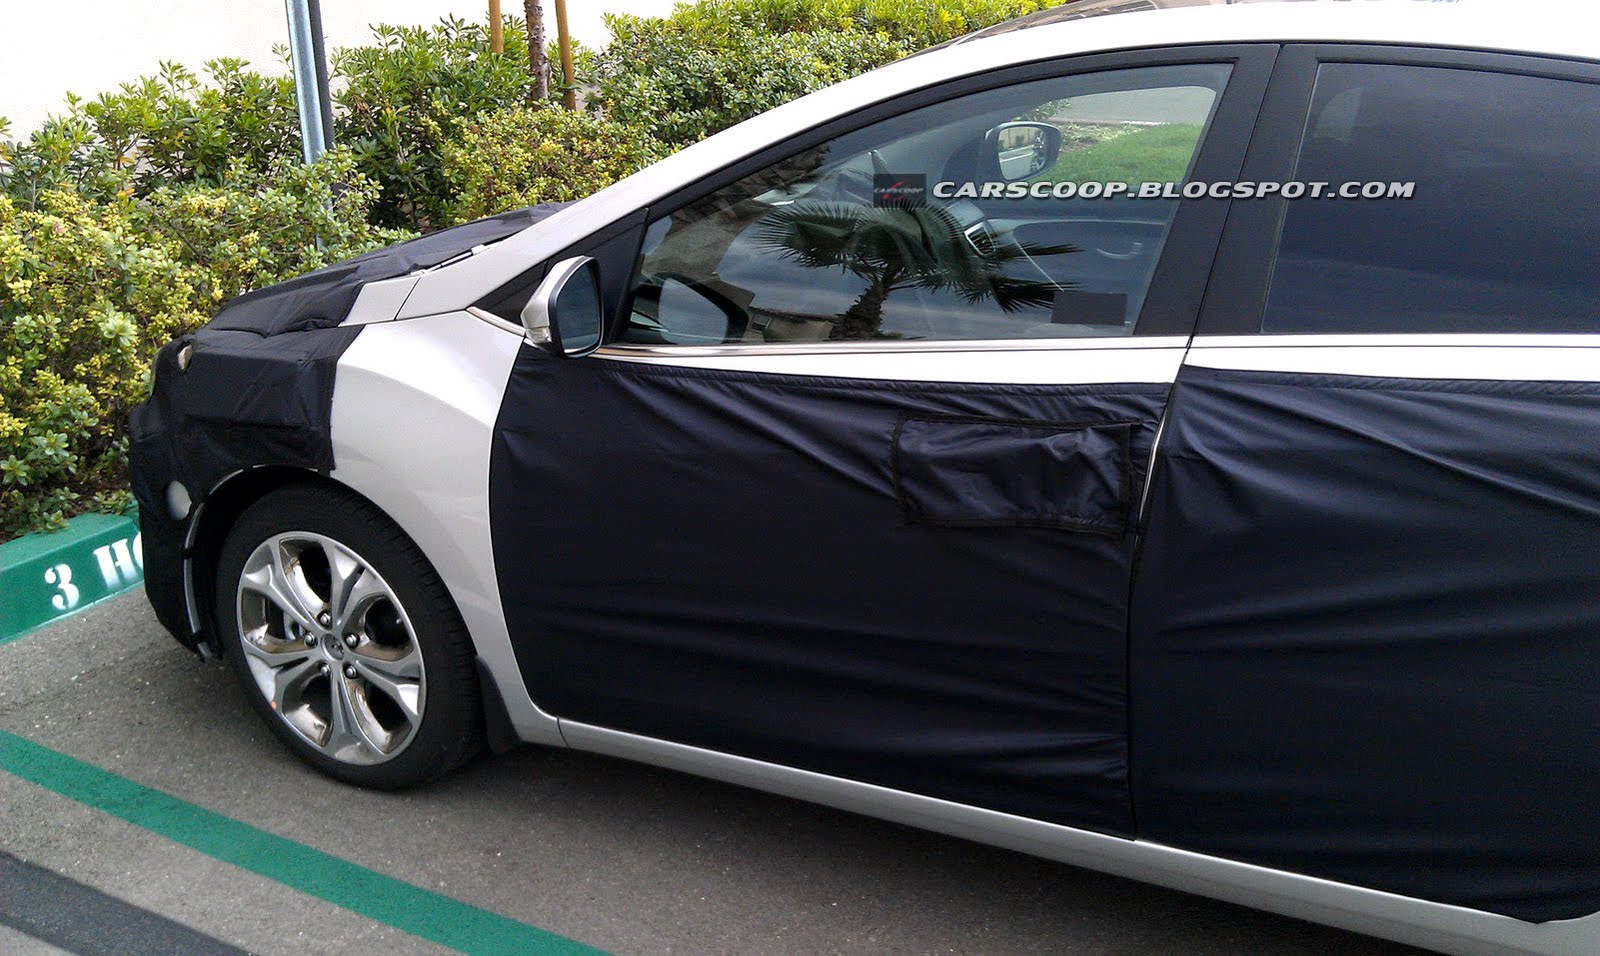 2013-Hyundai-Elantra-Touring-3.jpg : [현대] 아반떼MD 헤치백 모델 - 스파이샷(사진)